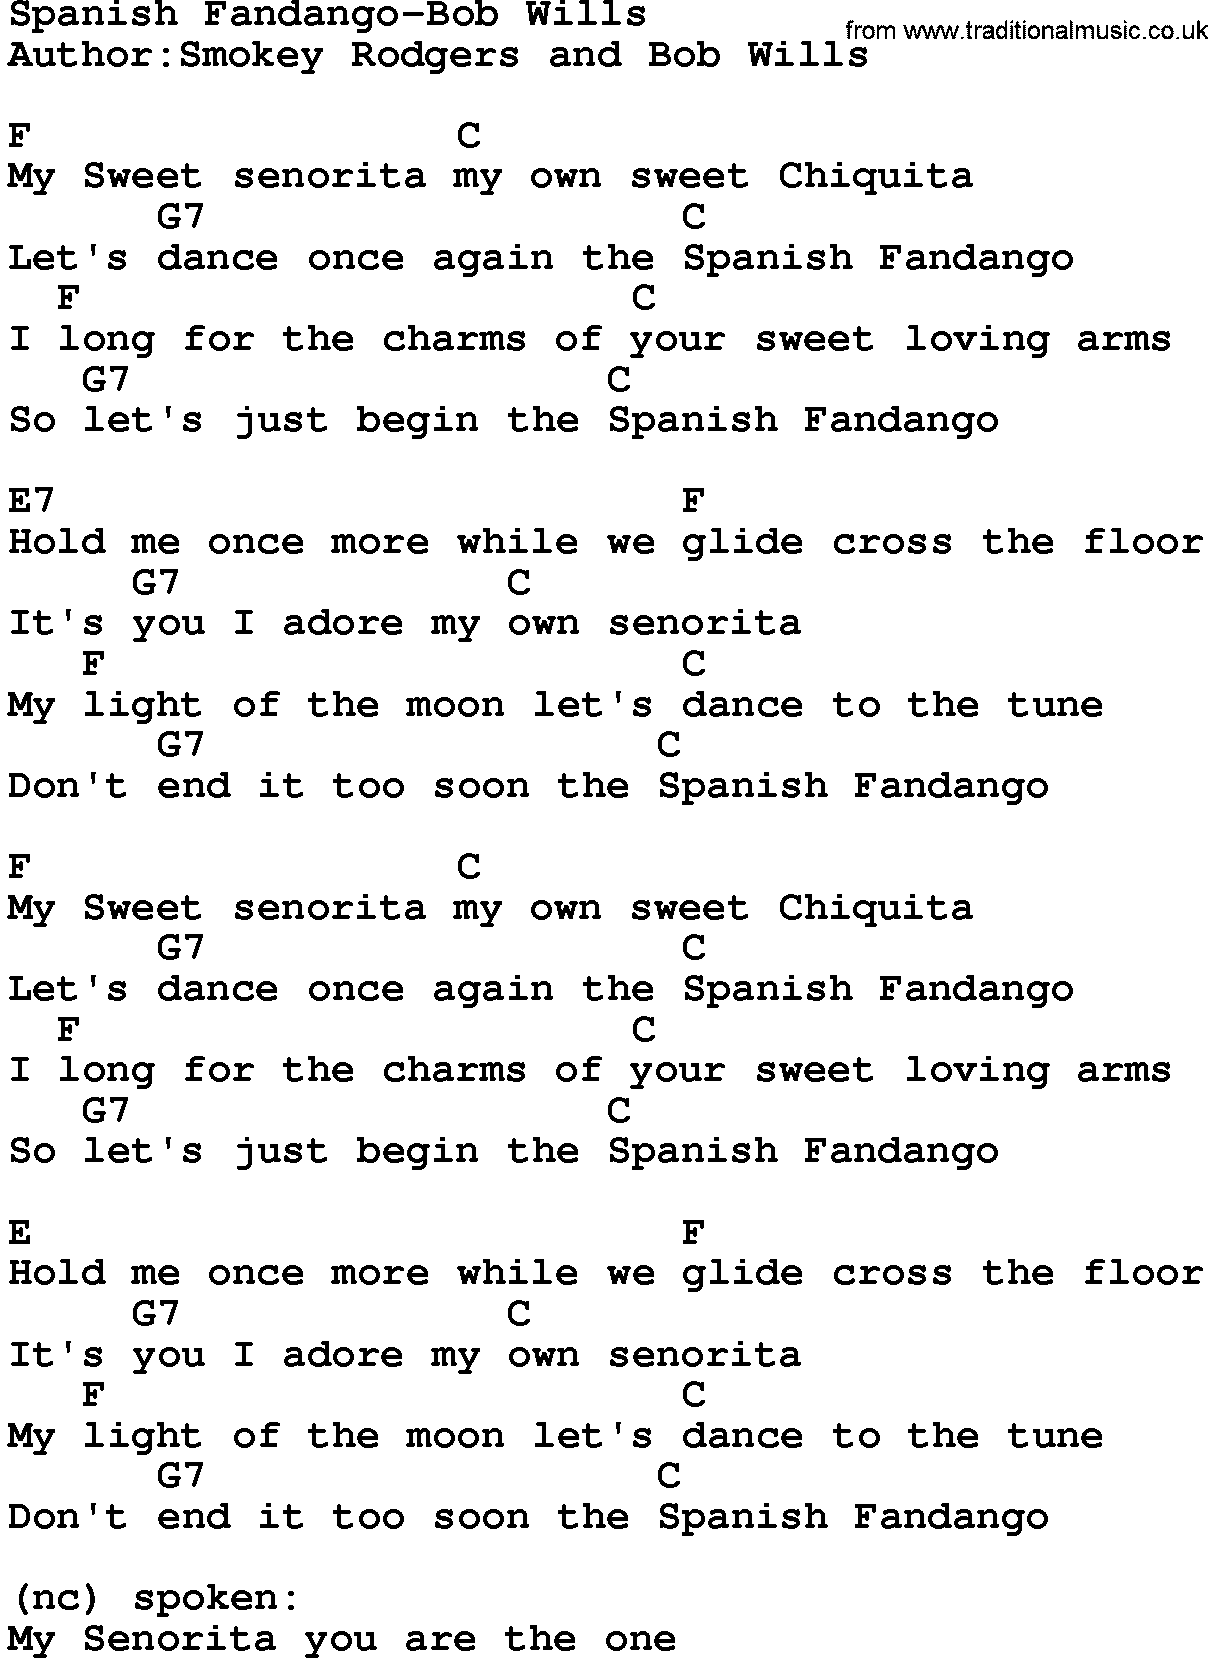 Country music song: Spanish Fandango-Bob Wills lyrics and chords